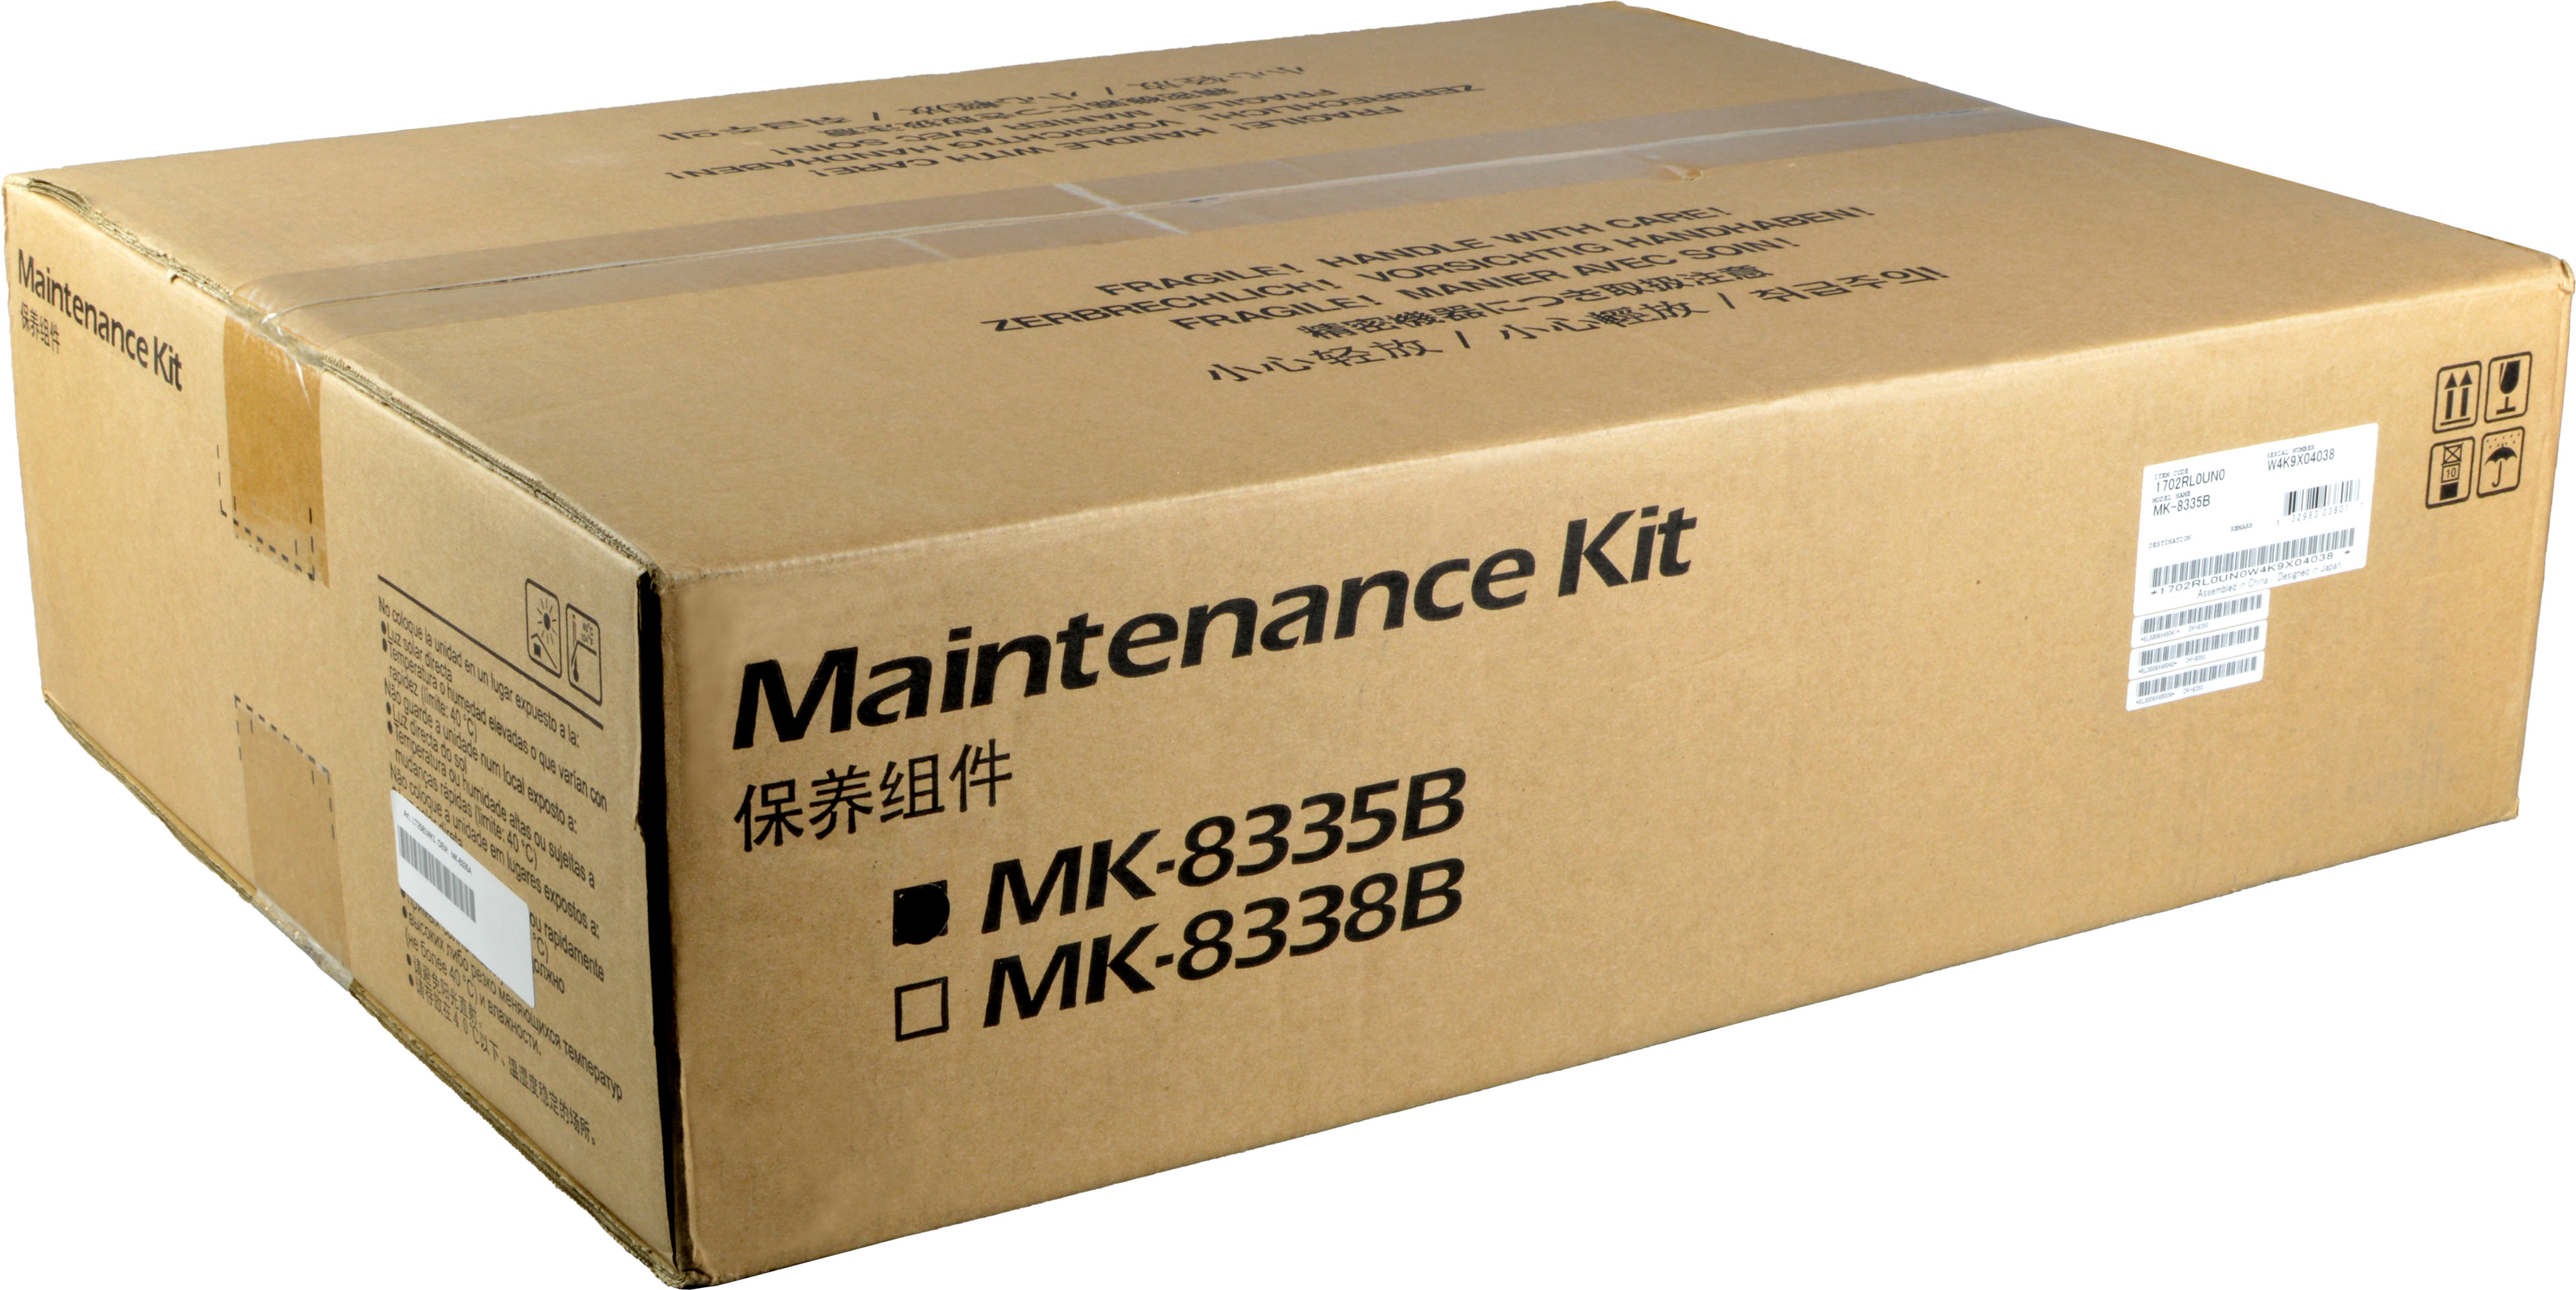 Kyocera Maintenance Kit MK-8335B  1702RL0UN0  color